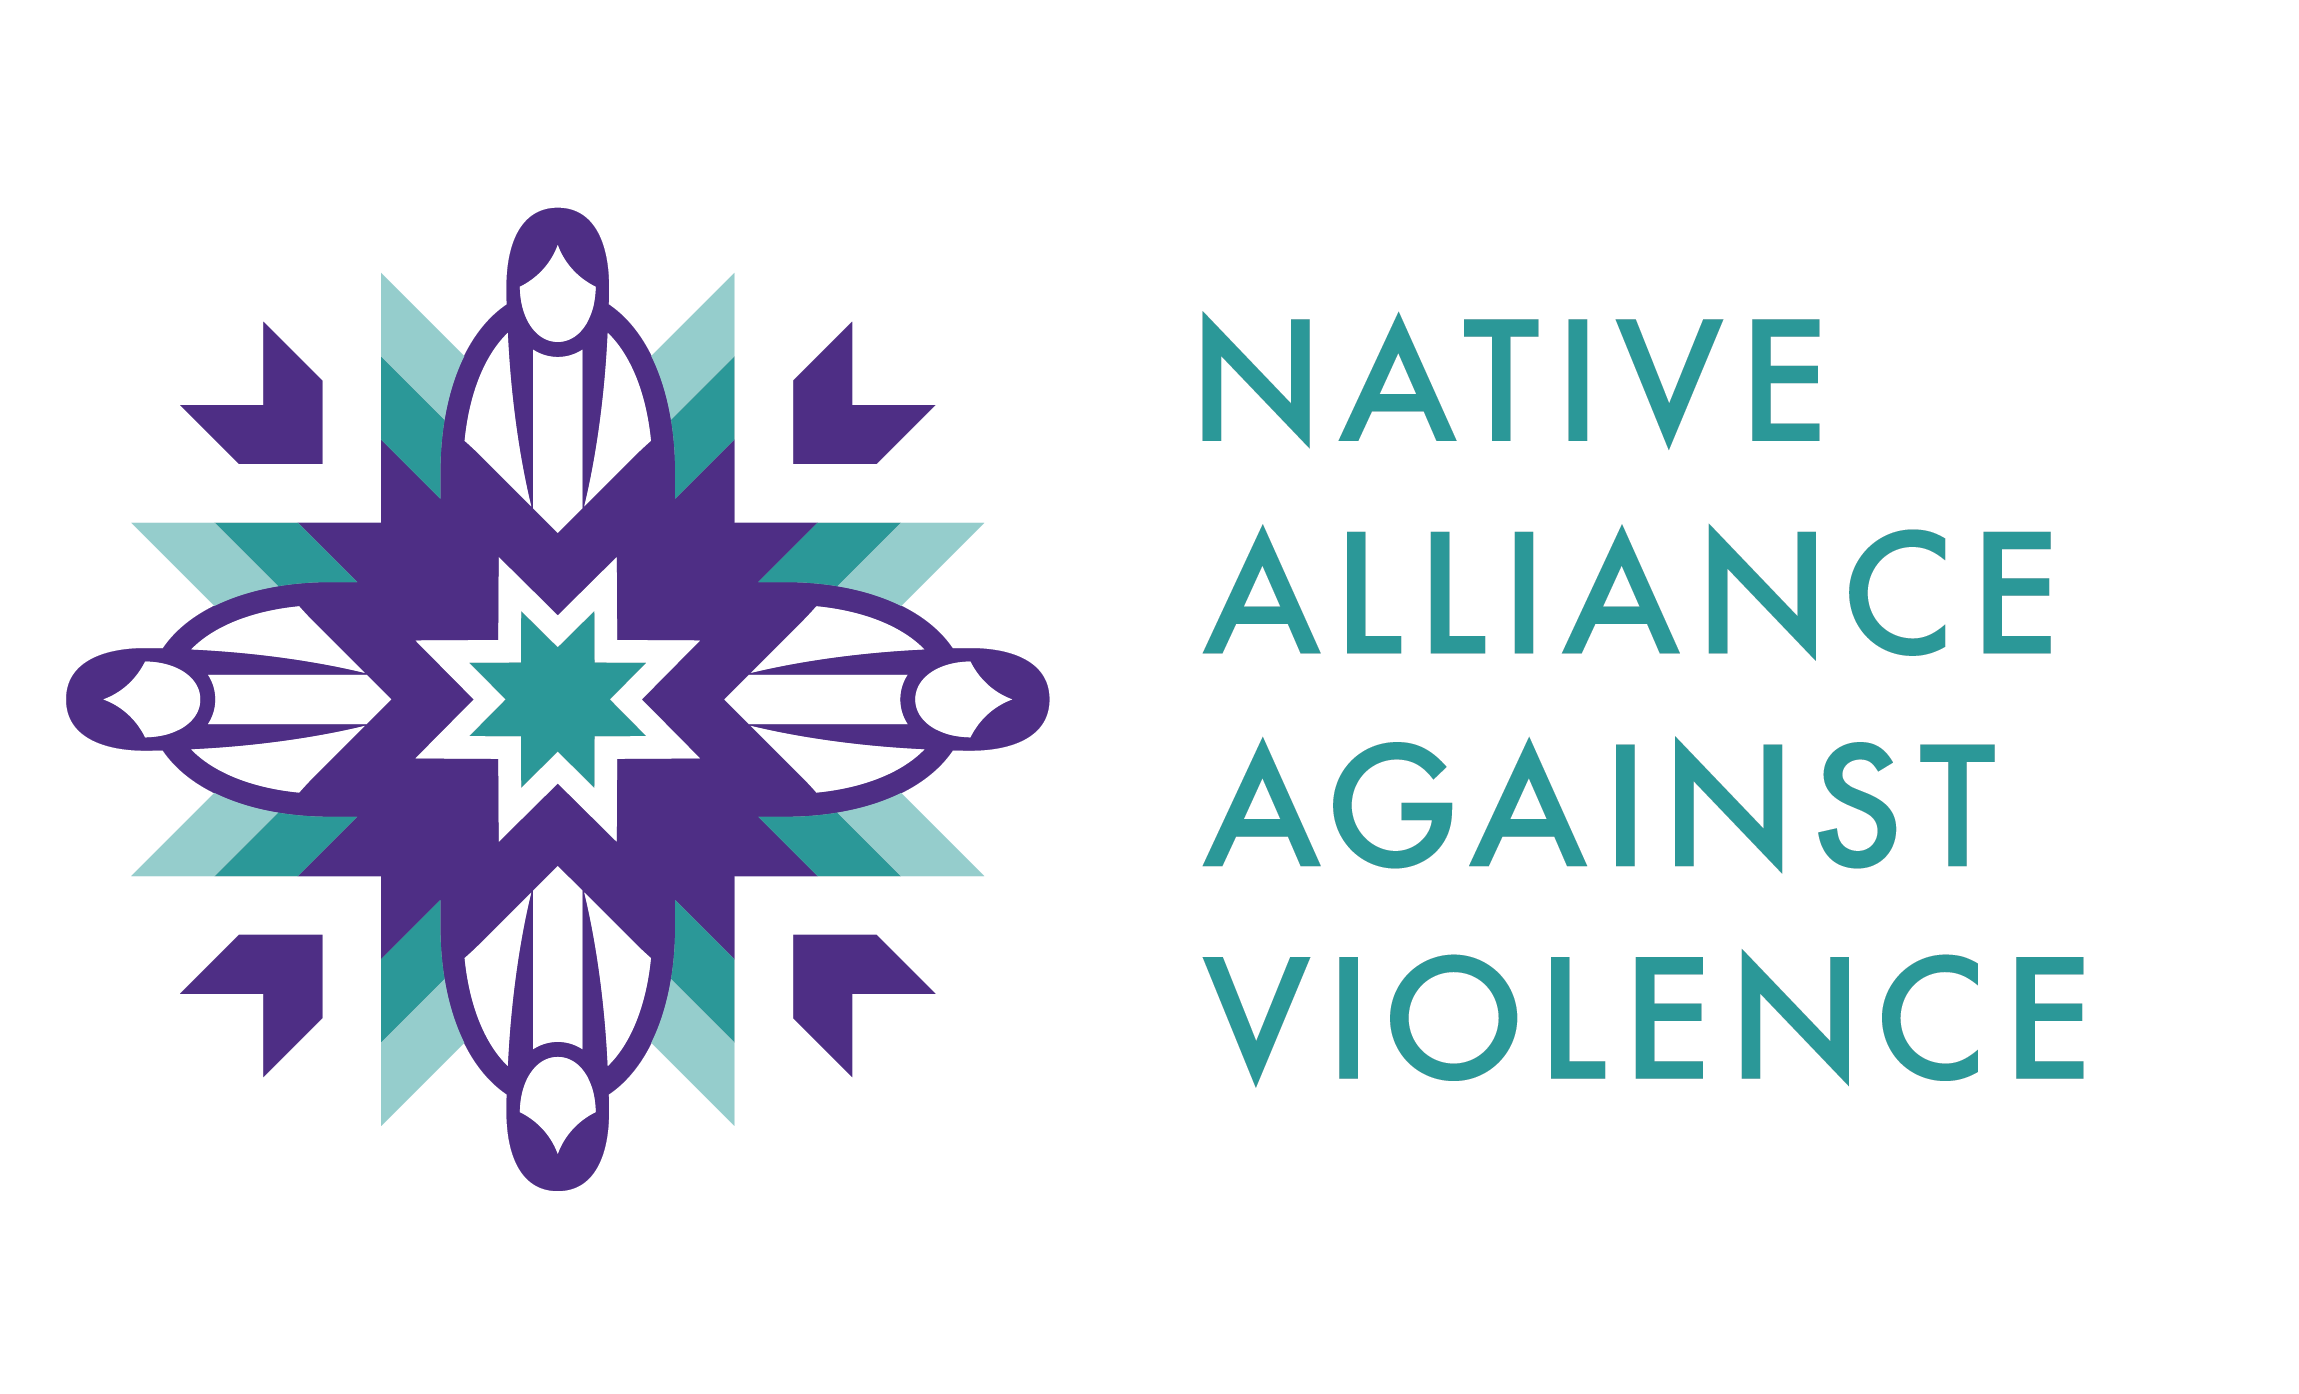 Native Alliance Against Violence